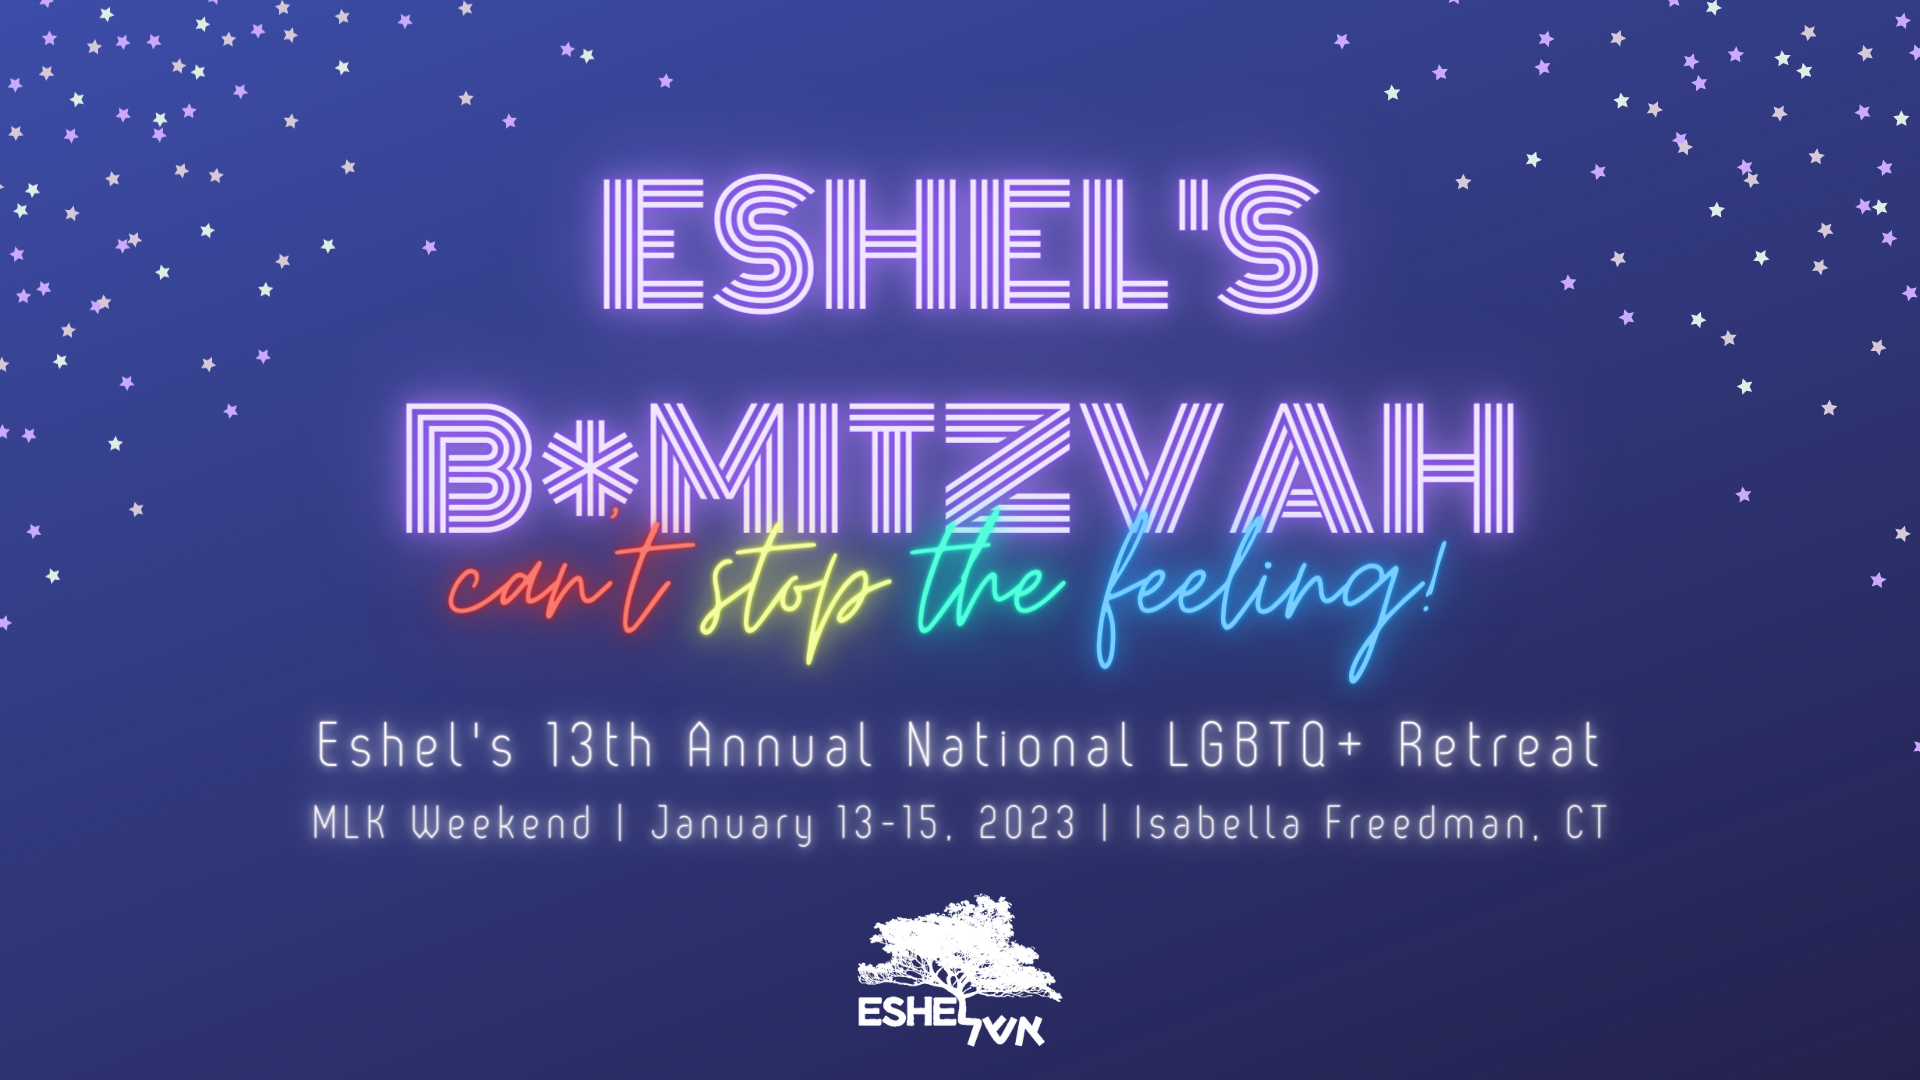 Eshel's B*Mitzvah: Can't Stop the Feeling! Eshel's 13th Annual National LGBTQ+ Retreat | MLK Weekend, January 13-15, 2022 @ Isabella Freedman, CT